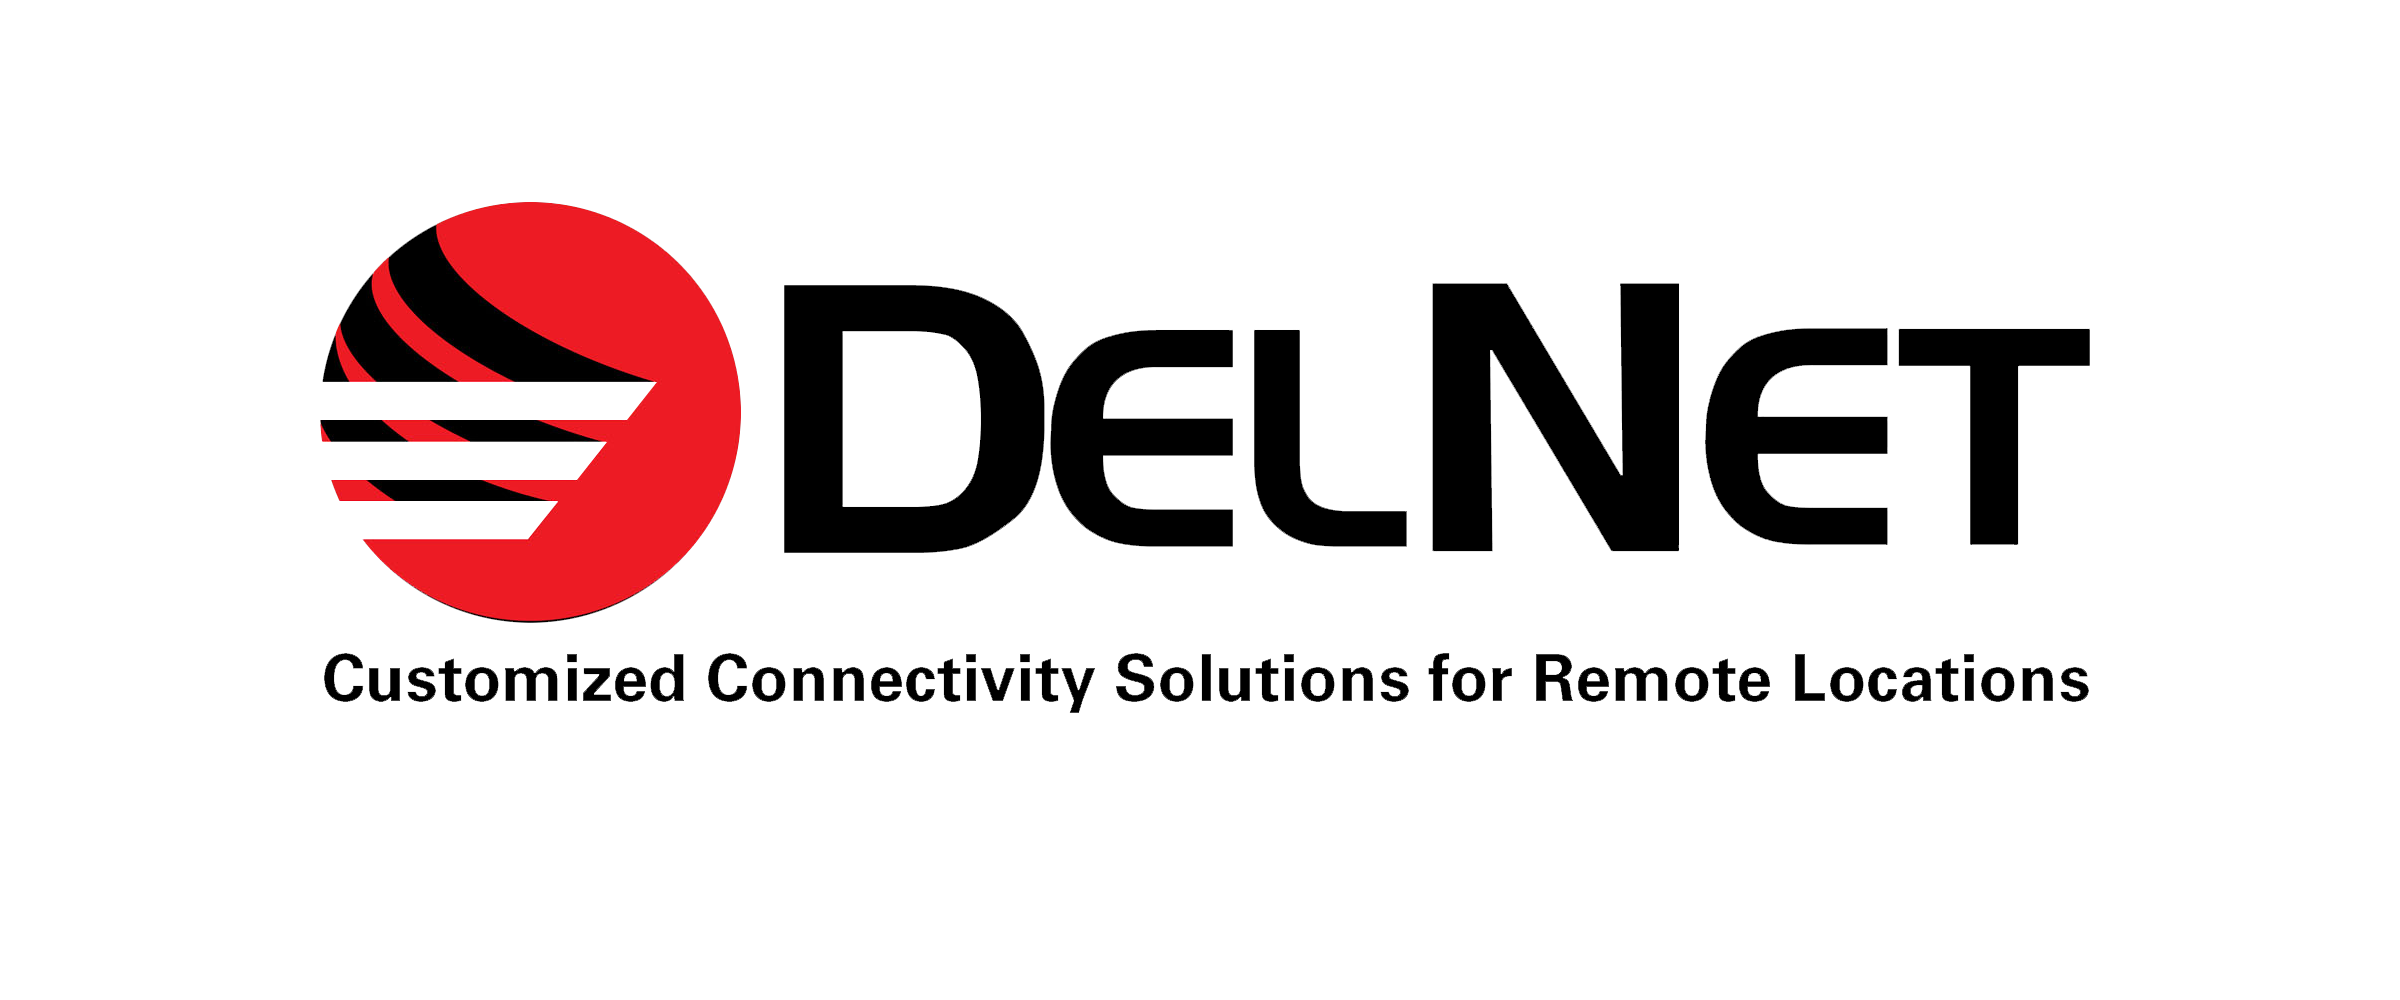 delnet_logo